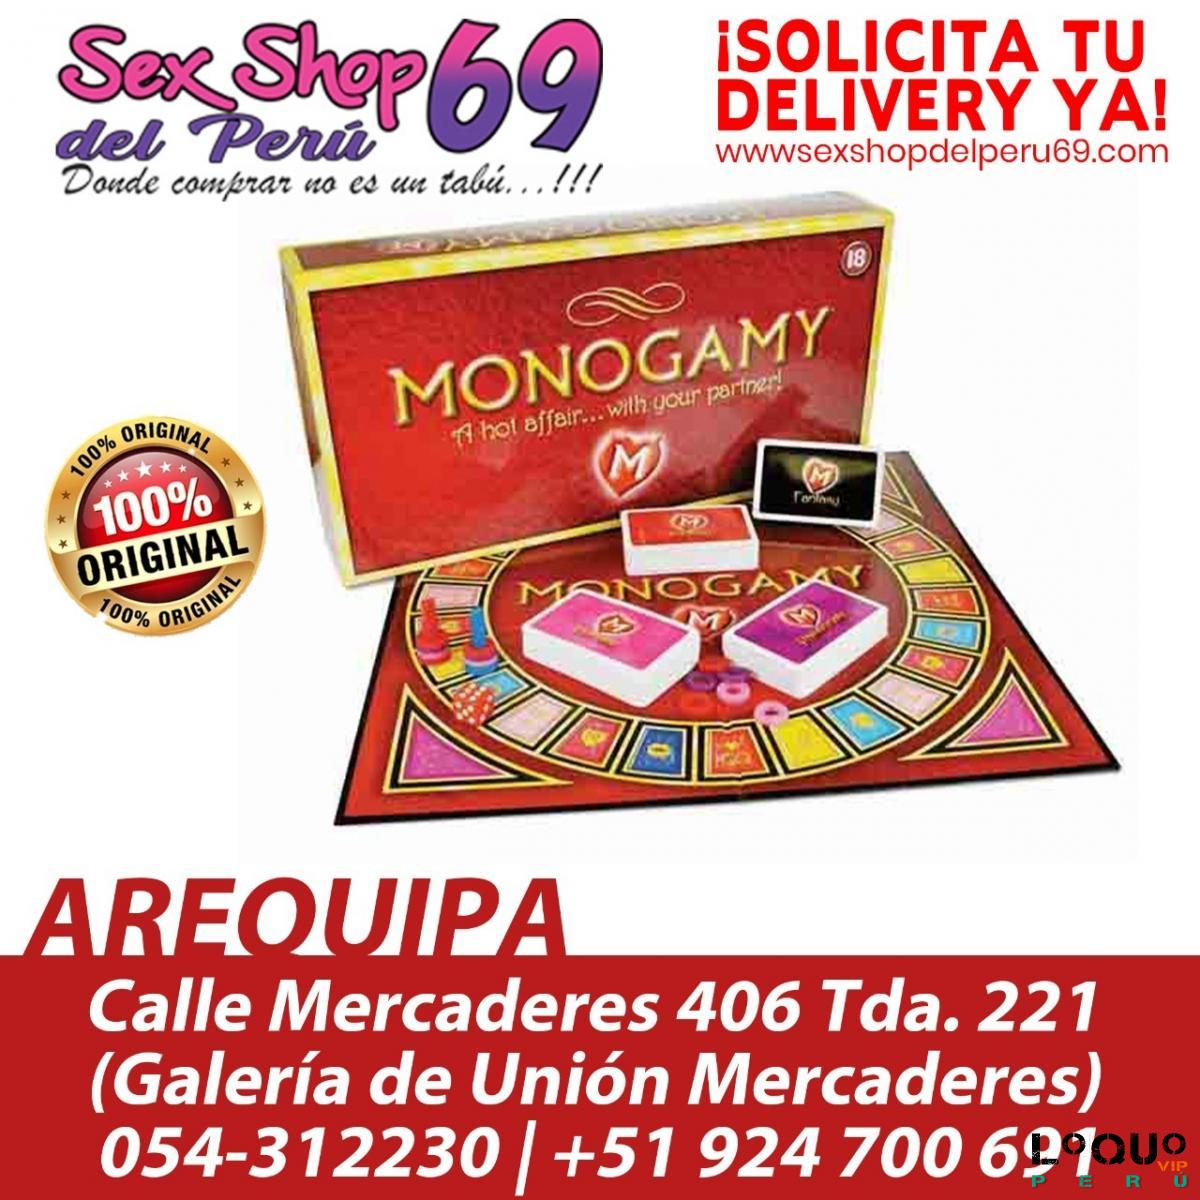 Sex Shop Arequipa: _MONOGAMY_ JUEGO DE PAREJA _DIVERSION INTIMA